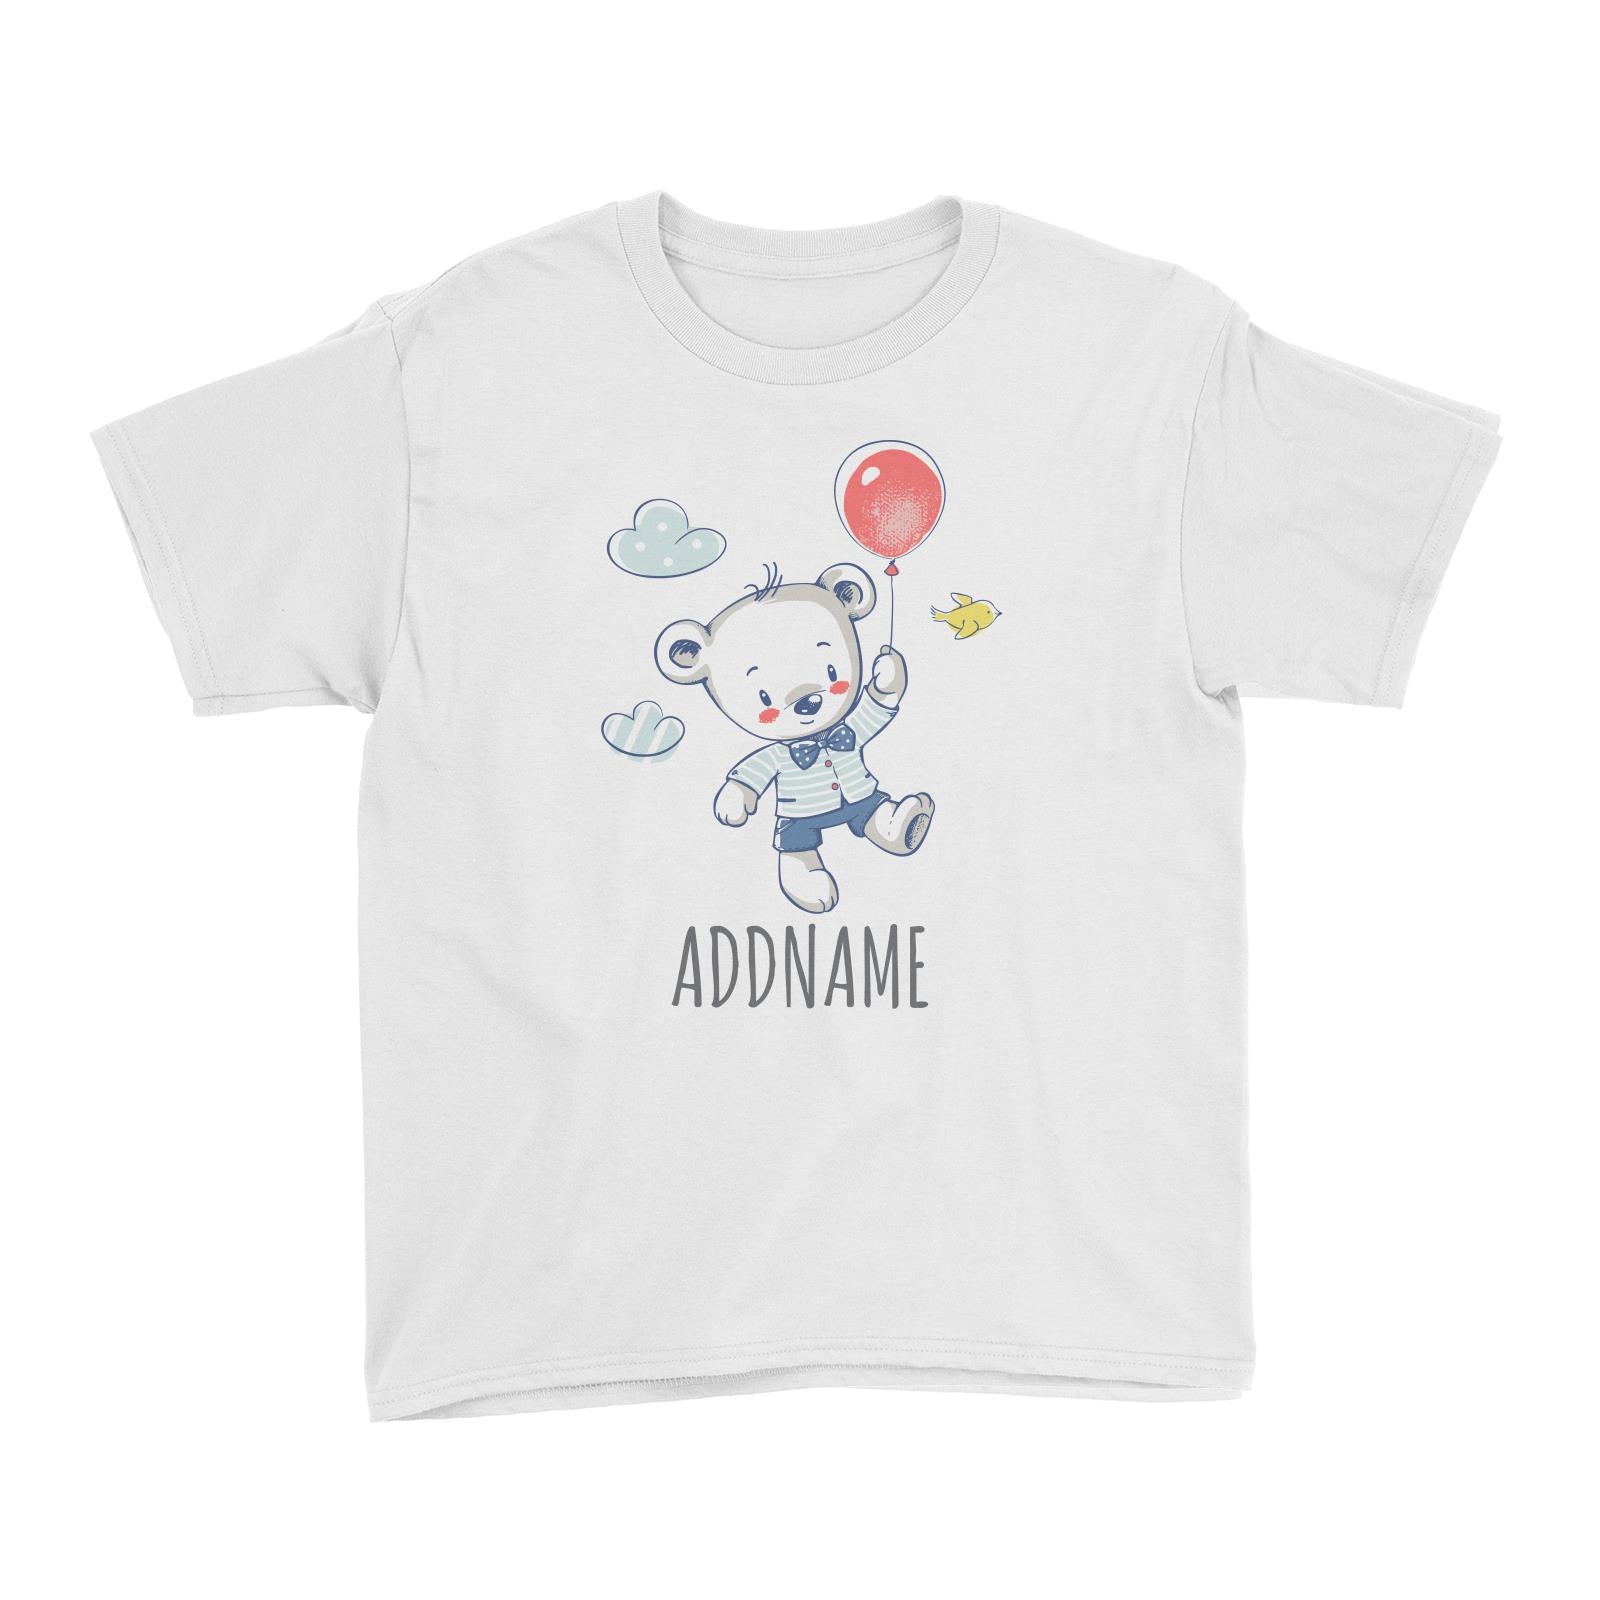 Boy Bear on Balloon White Kid's T-Shirt Personalizable Designs Cute Sweet Animal For Boys HG